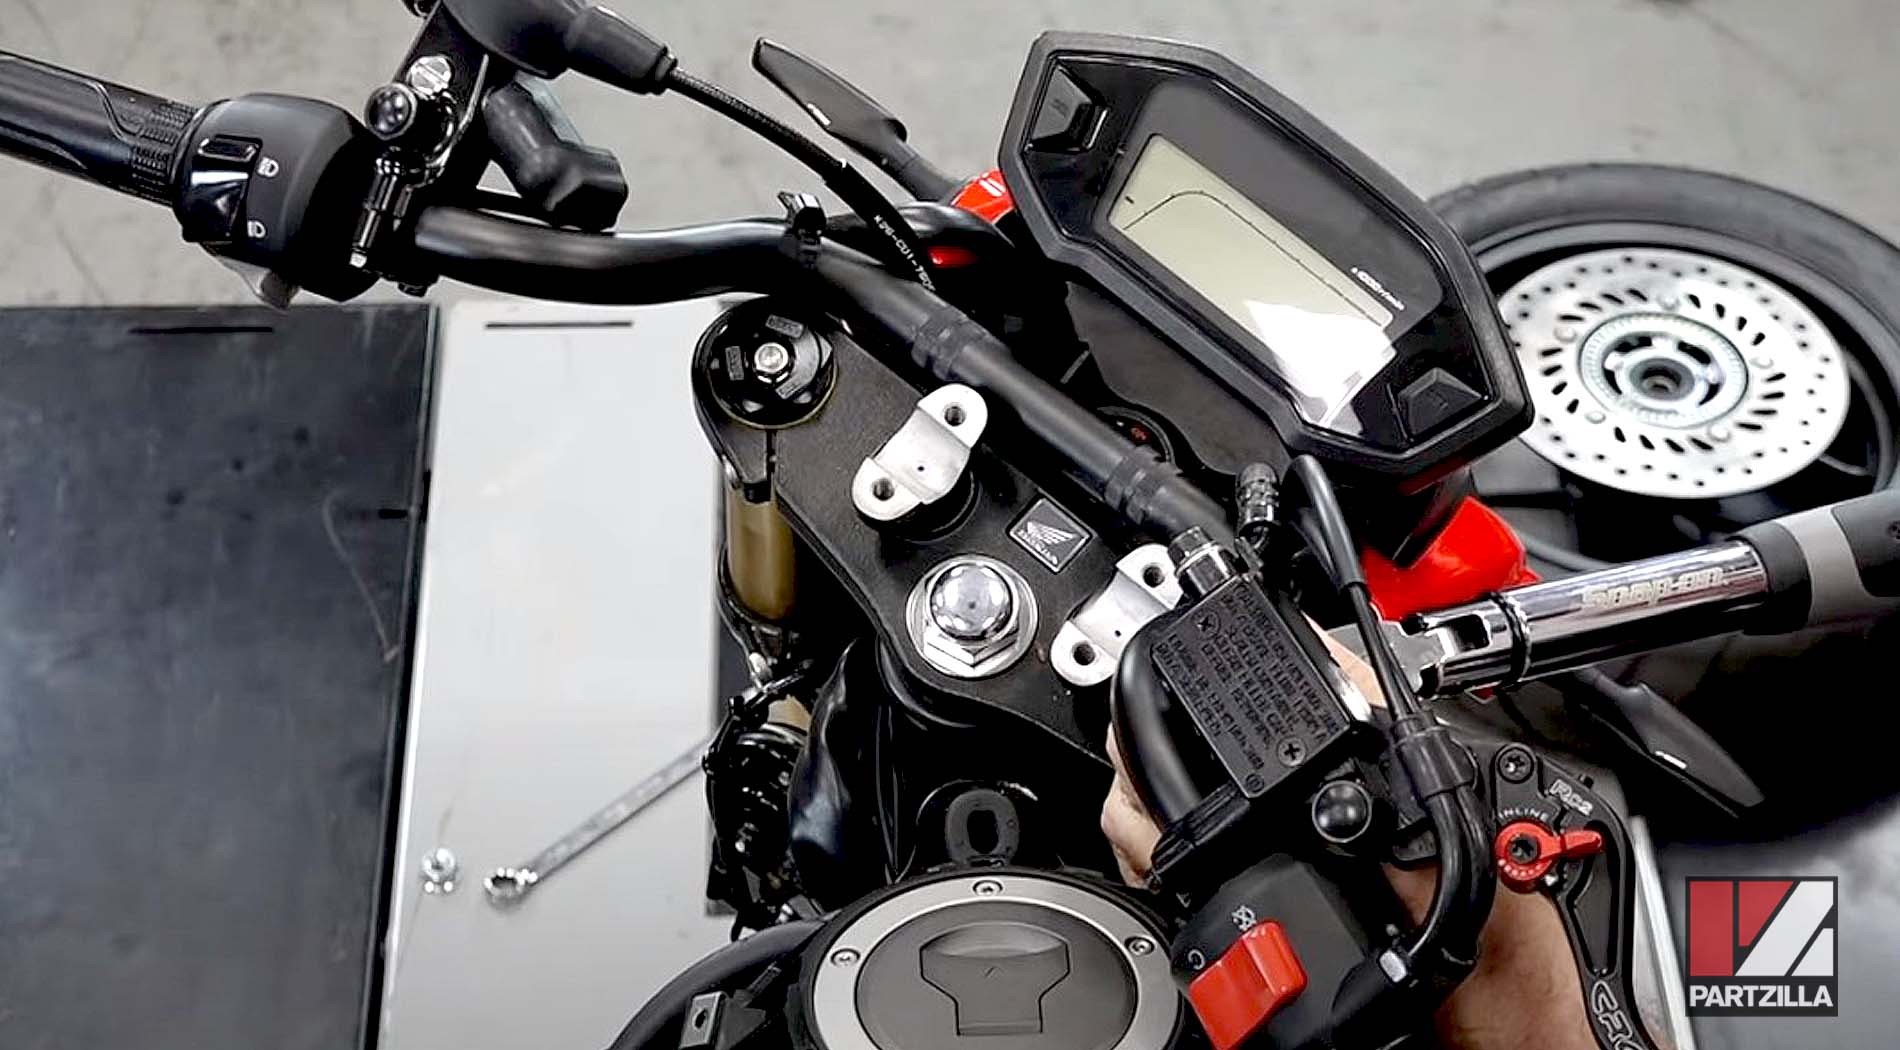 Honda Grom ABS 125 motorcycle aftermarket fork kit upgrade